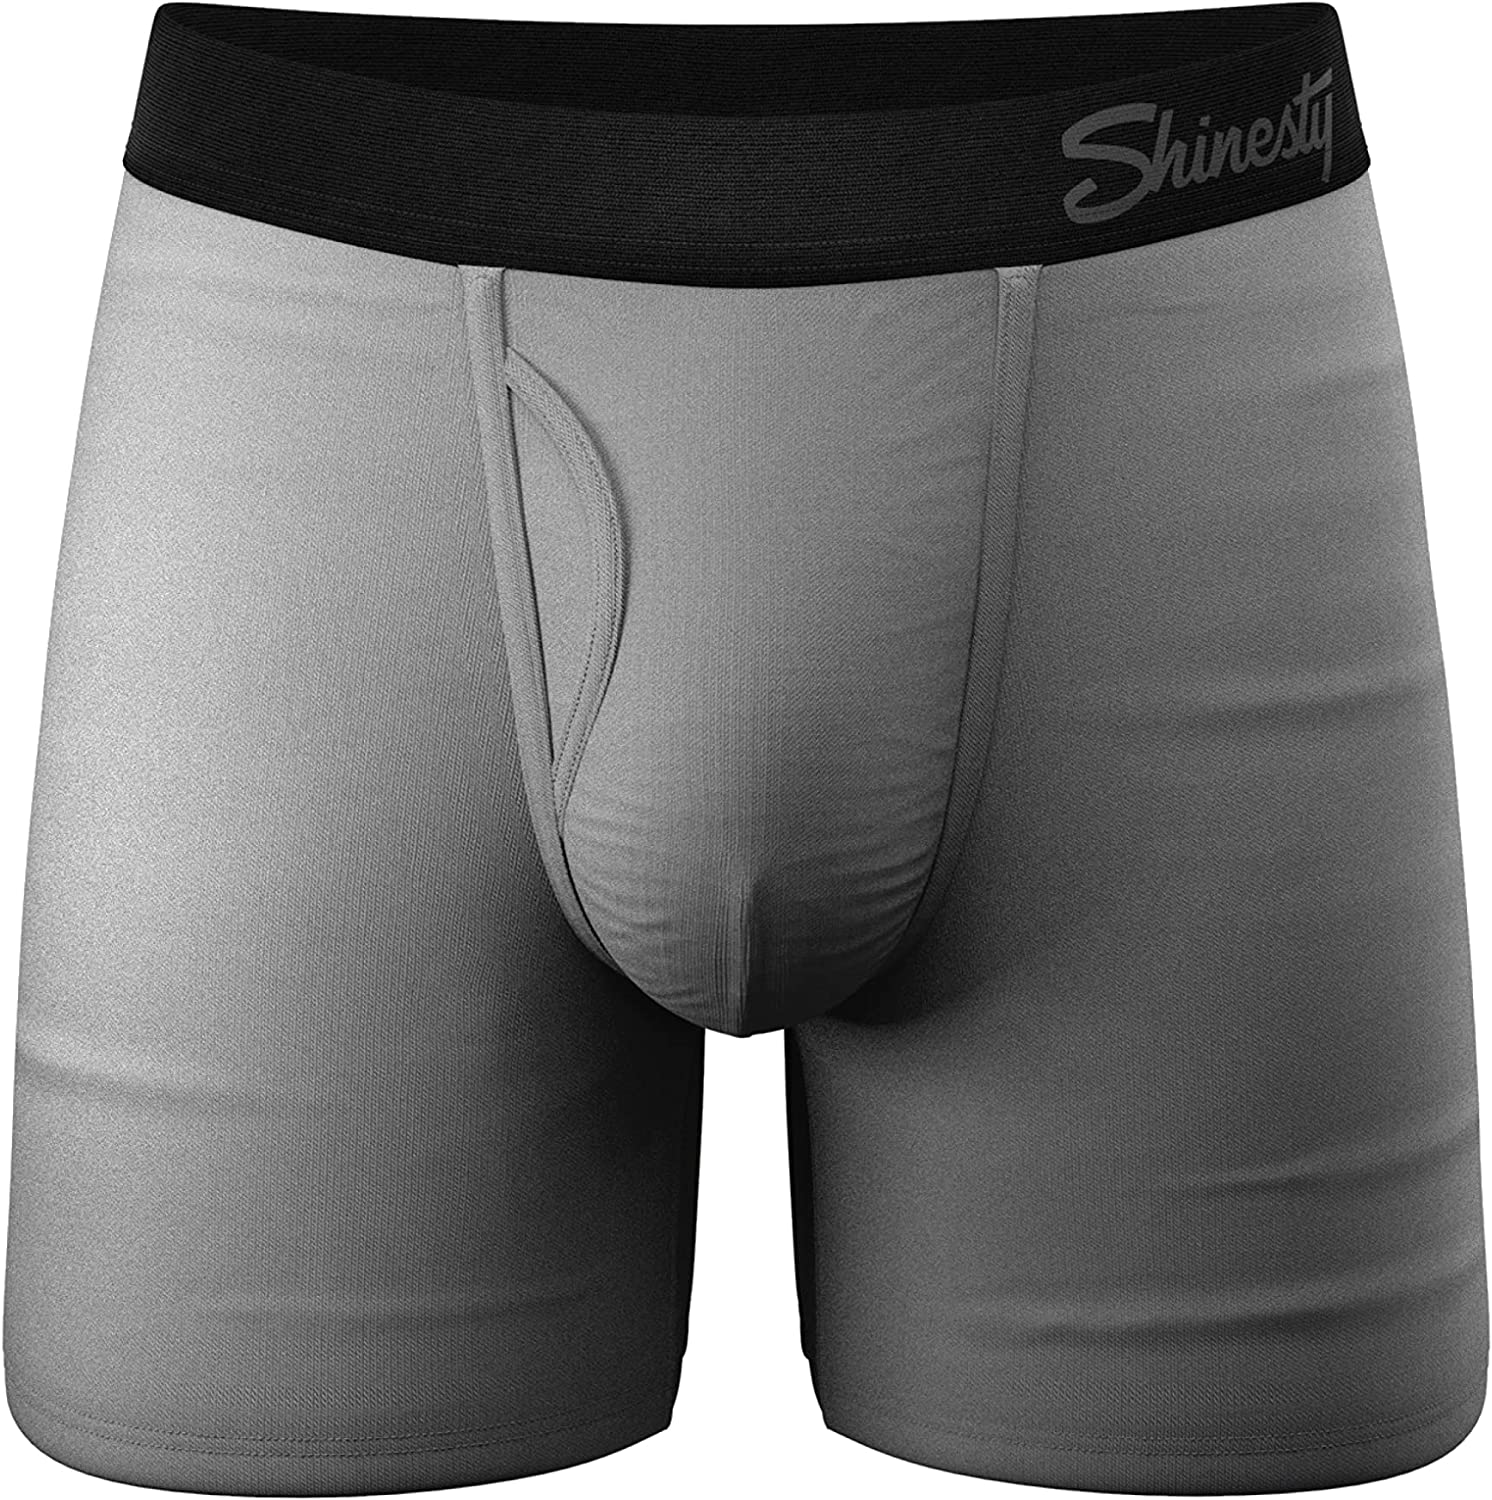 Shinesty Big Bang Ball Hammock Pouch Trunks Underwear Mens Large